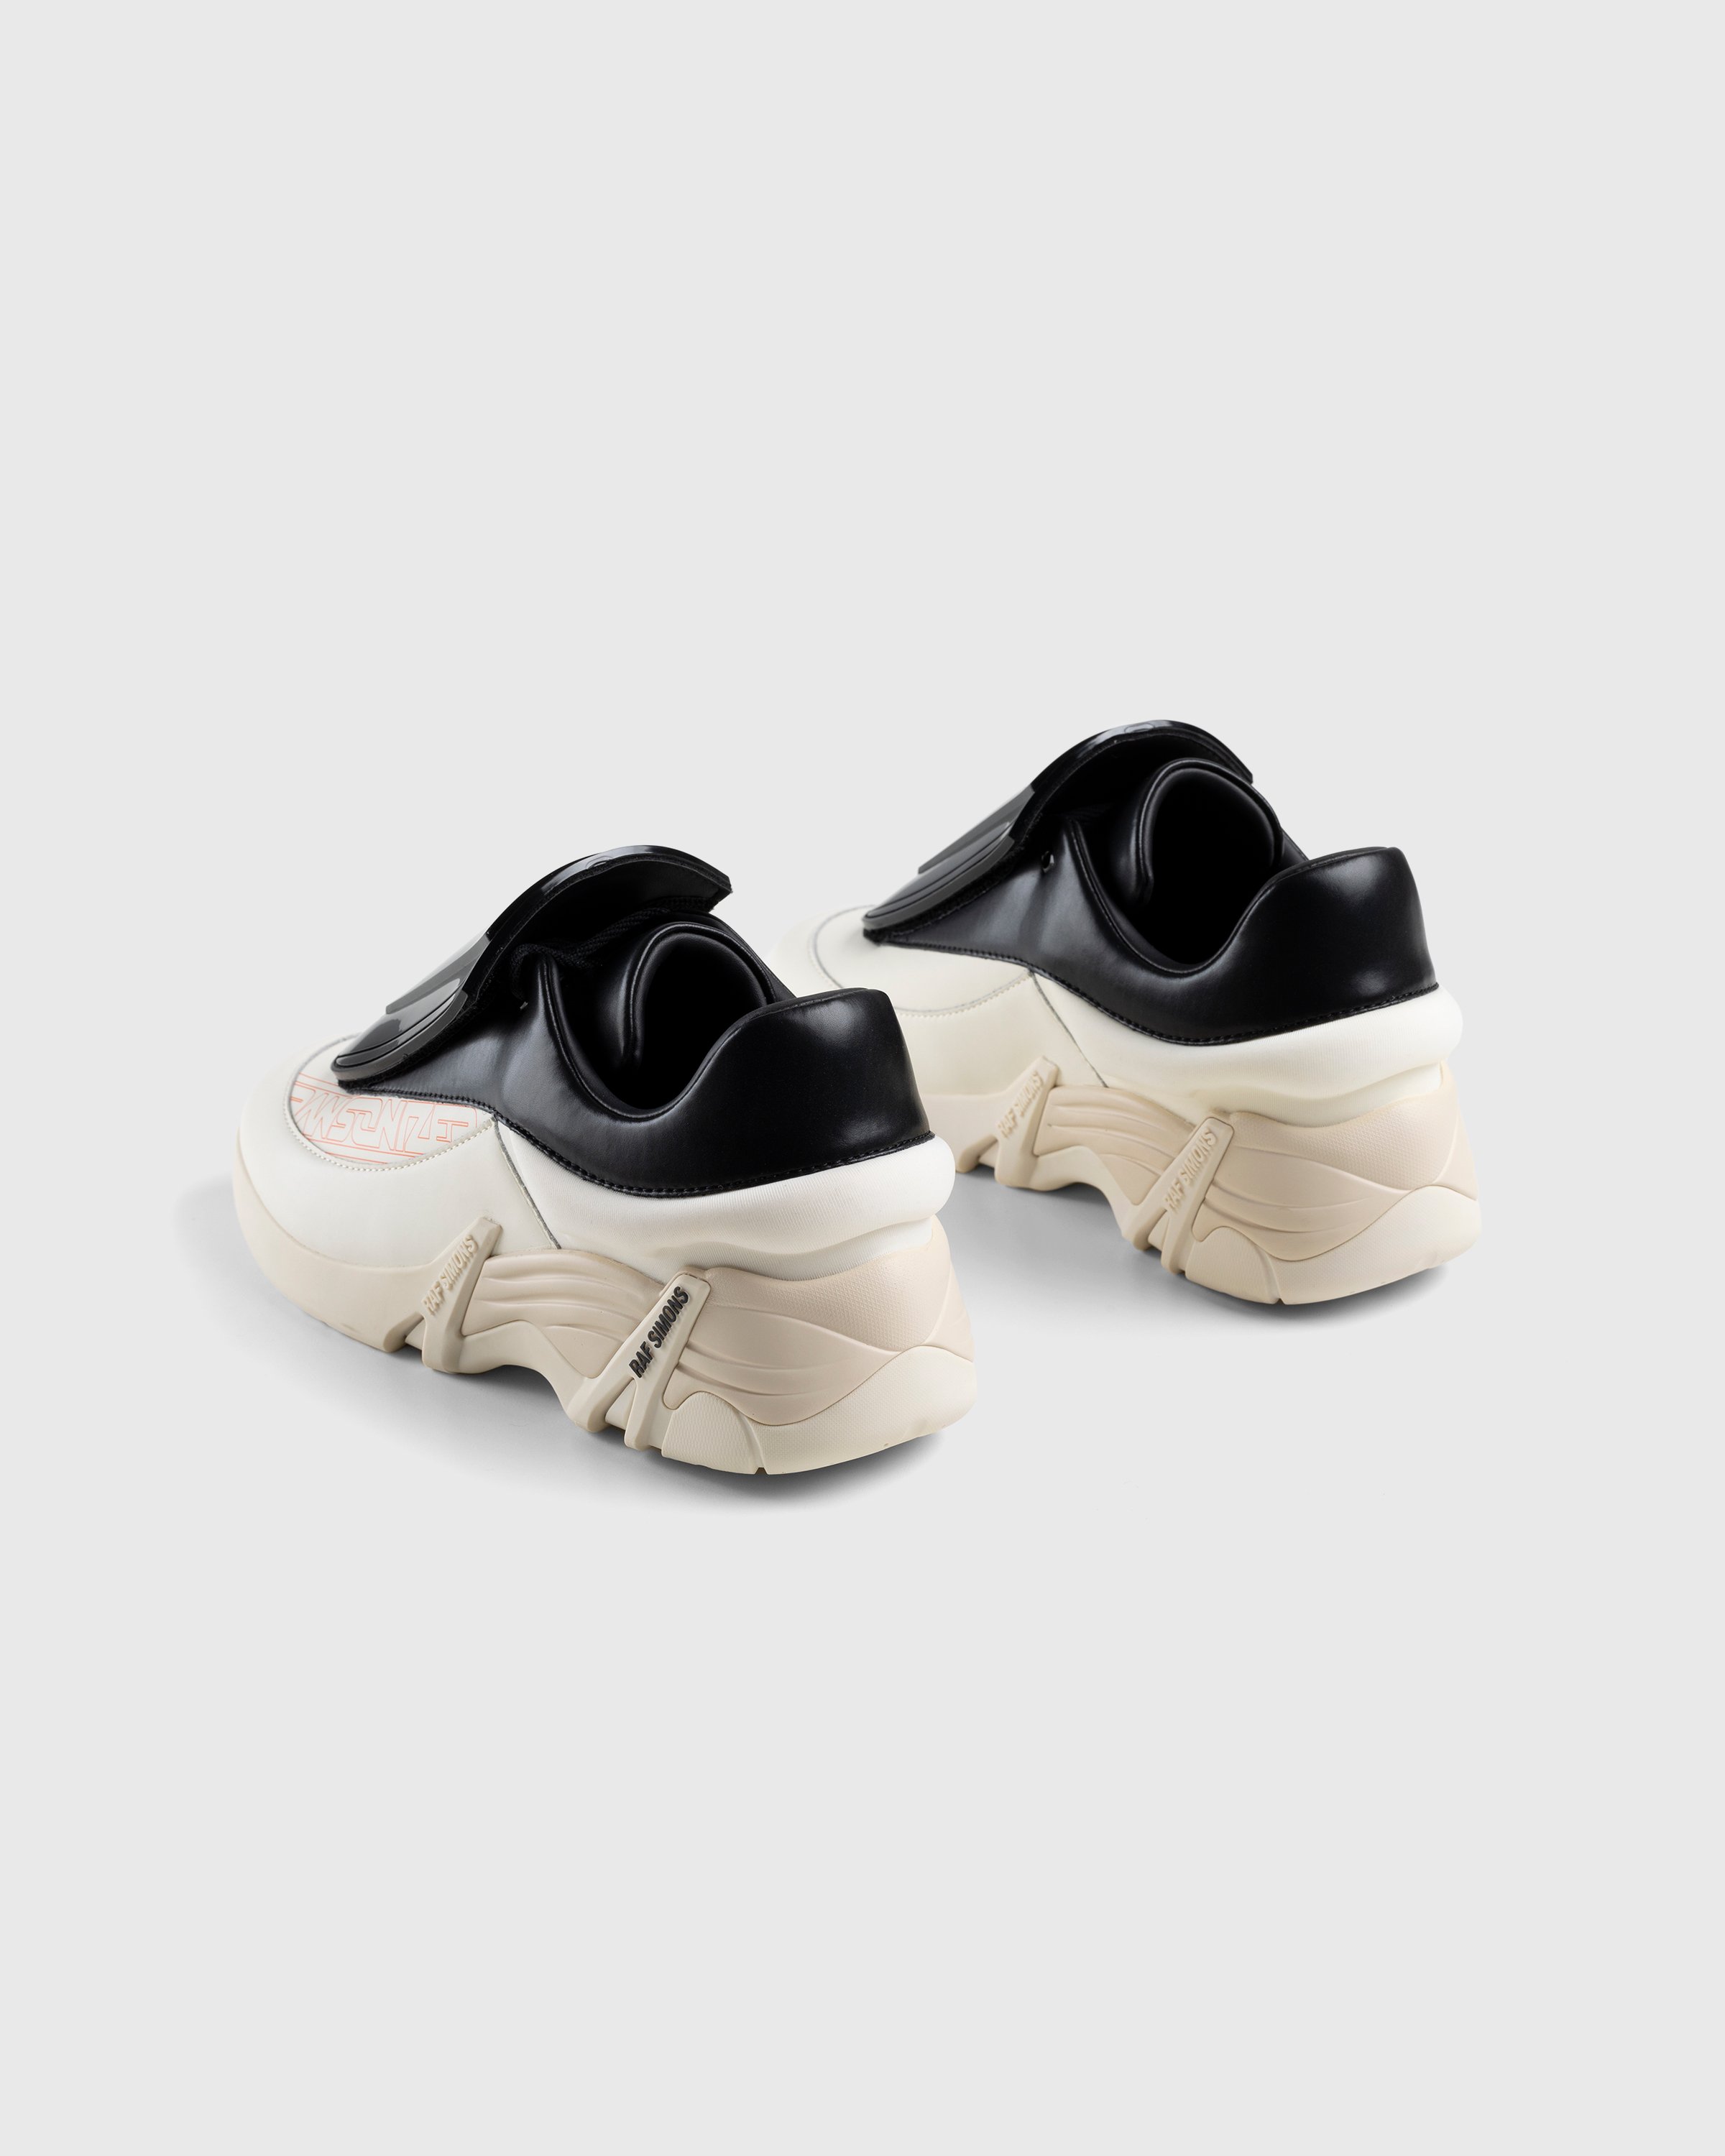 Raf Simons - Antei Black/White/Cream - Footwear - Beige - Image 4